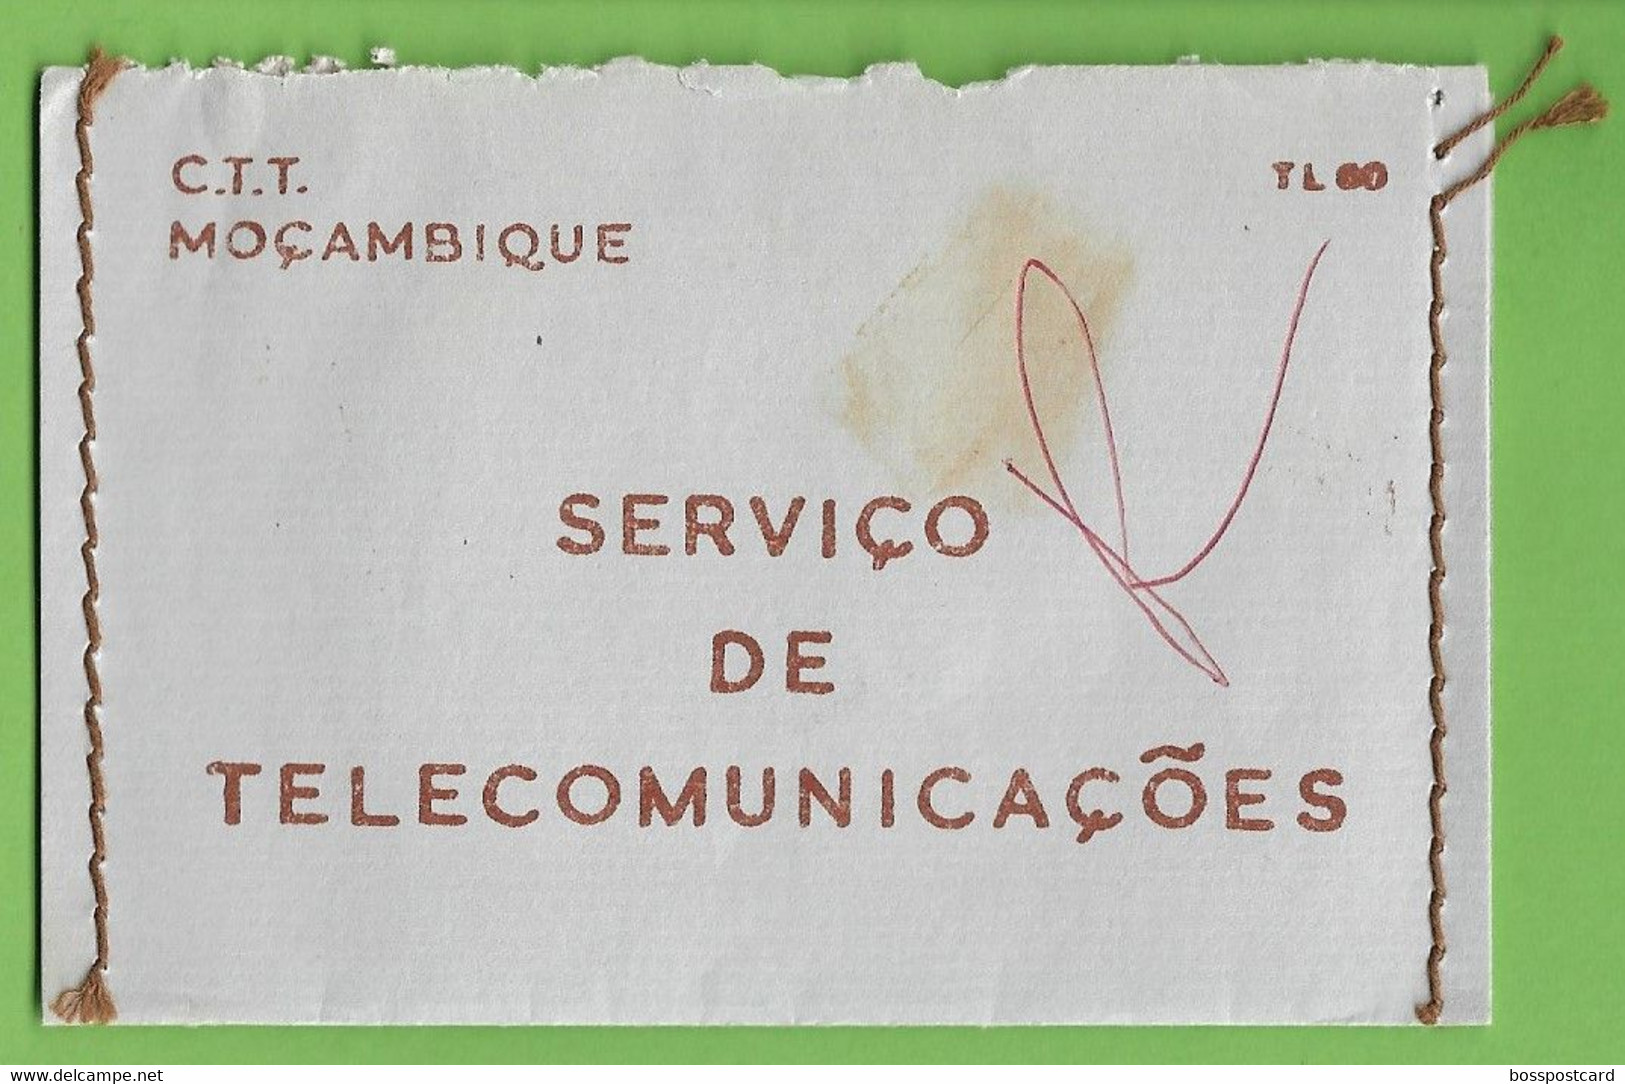 História Postal - Filatelia - Serviço Telegráfico - Telegrama - Telegram - Philately - Moçambique - Portugal - Storia Postale